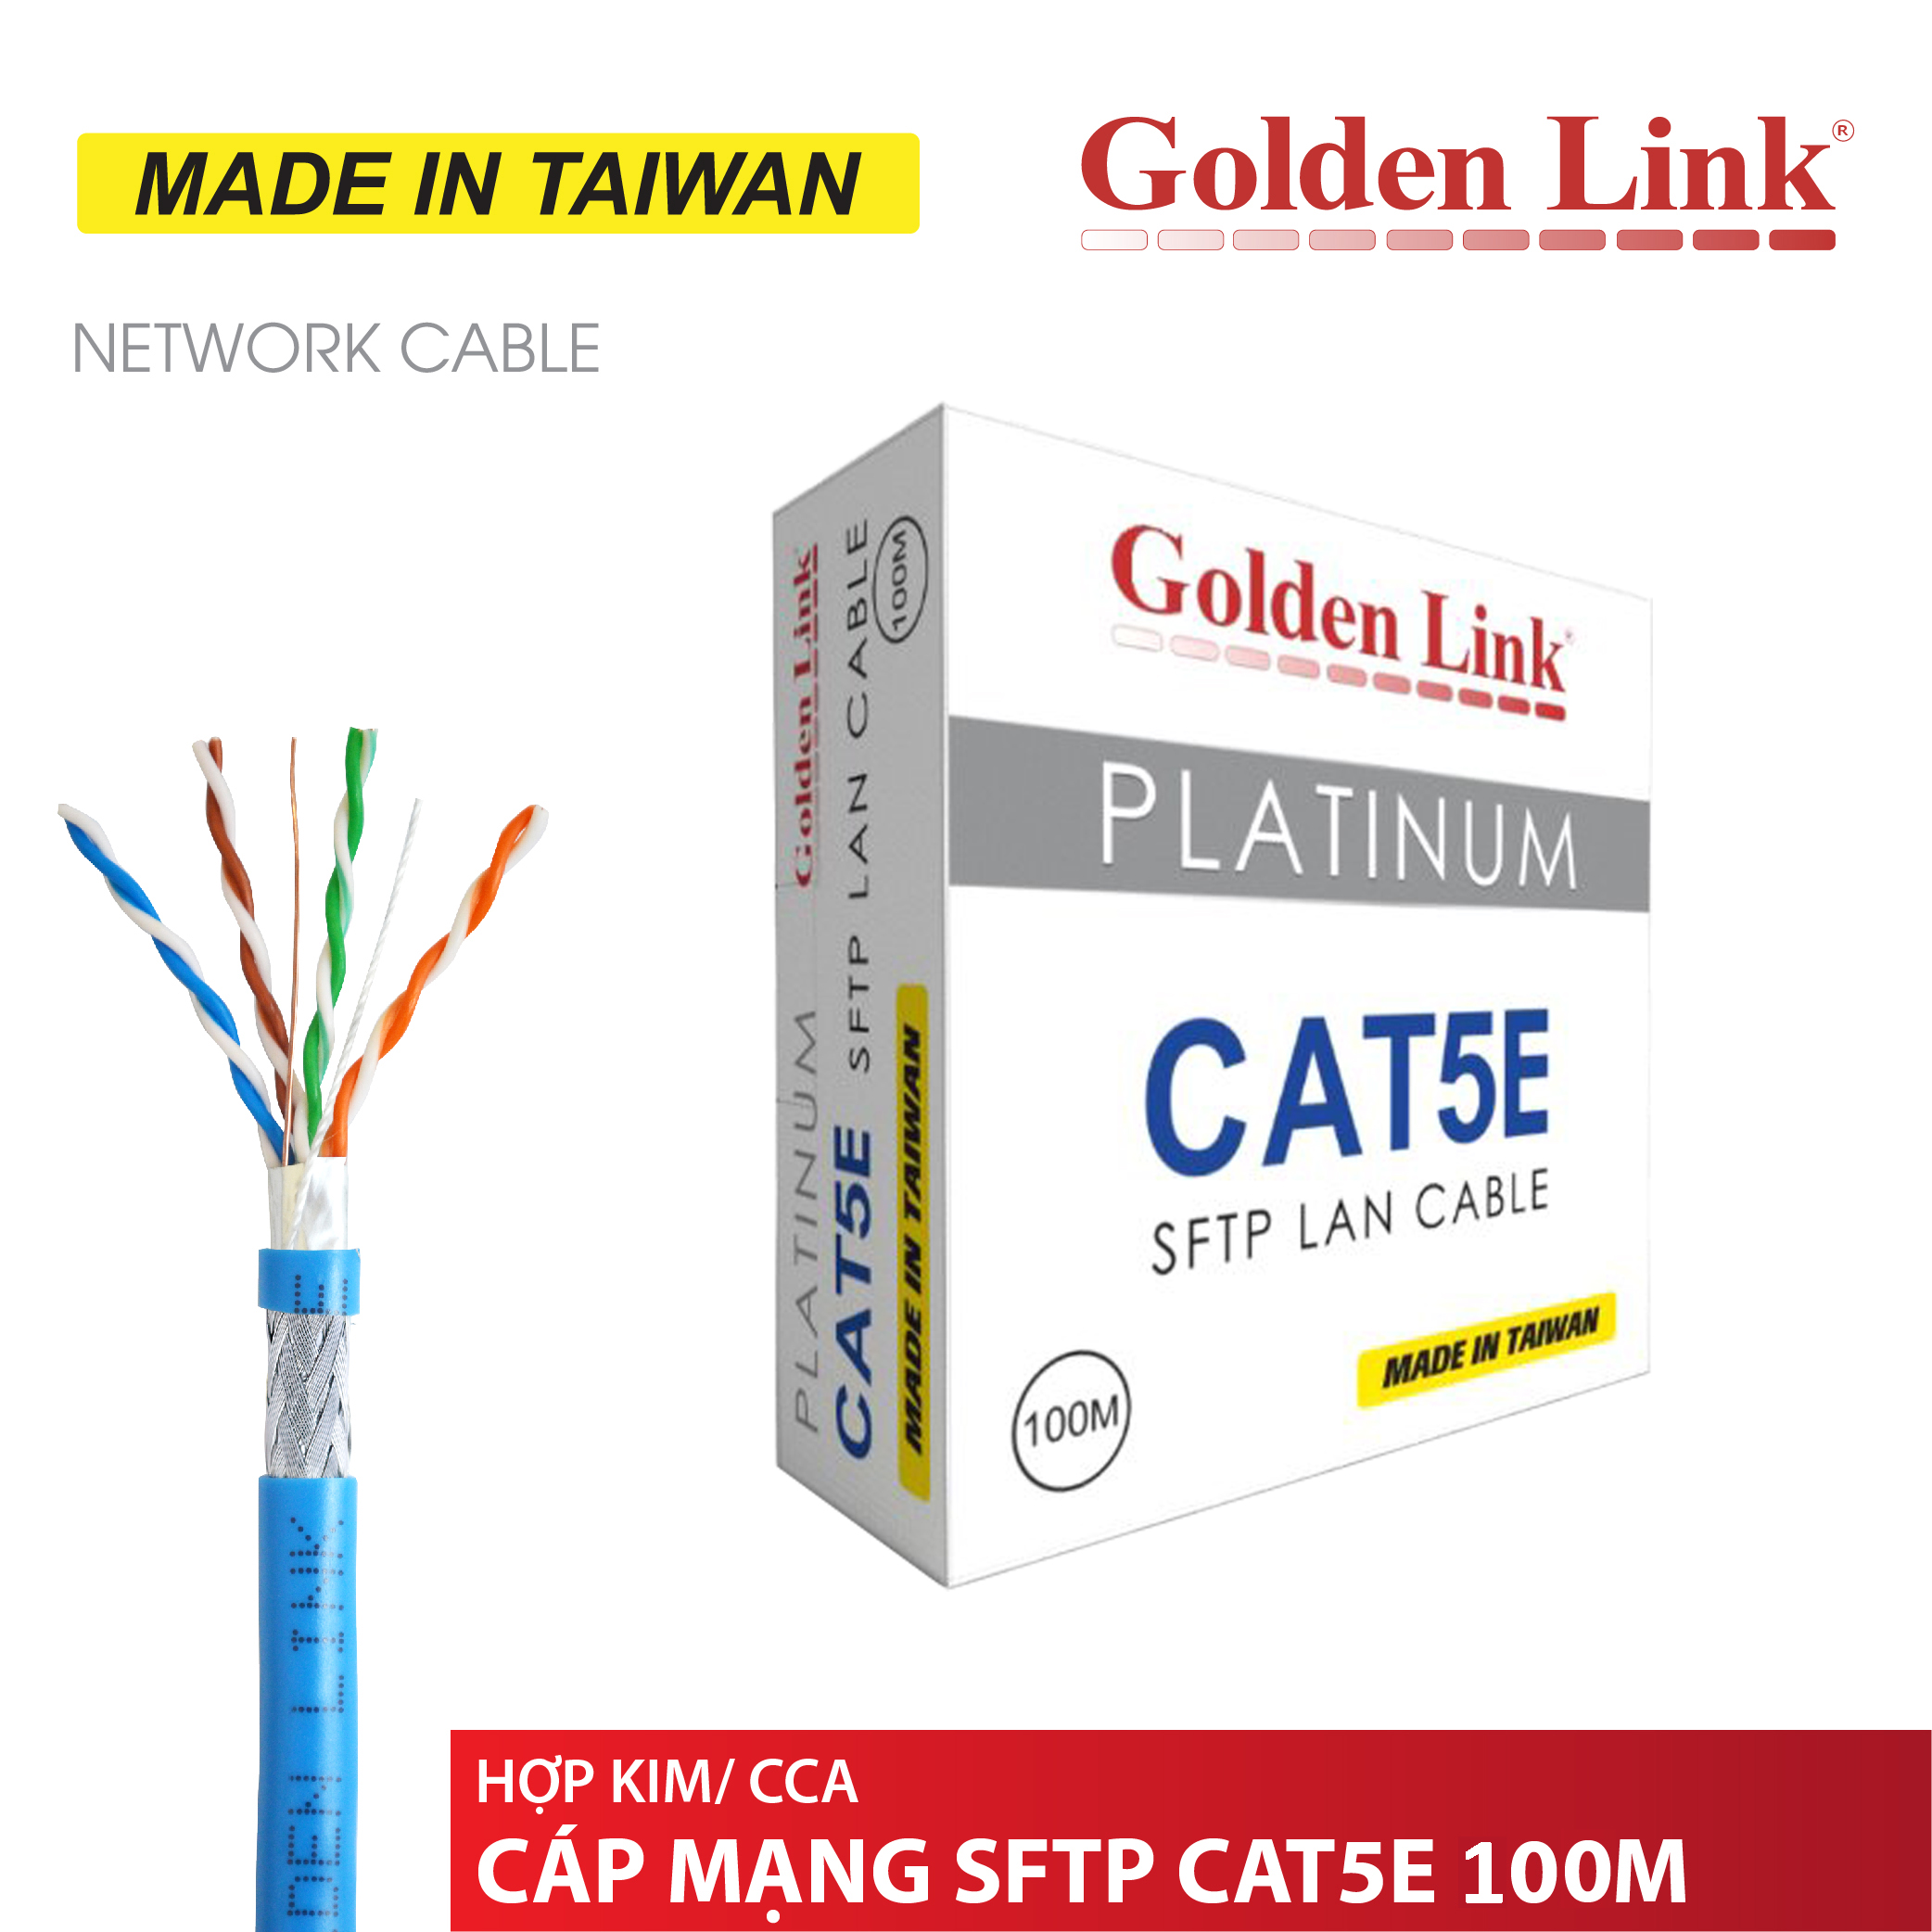 CÁP MẠNG GOLDEN LINK PLATINUM SFTP CAT 5E MADE IN TAIWAN - 100M